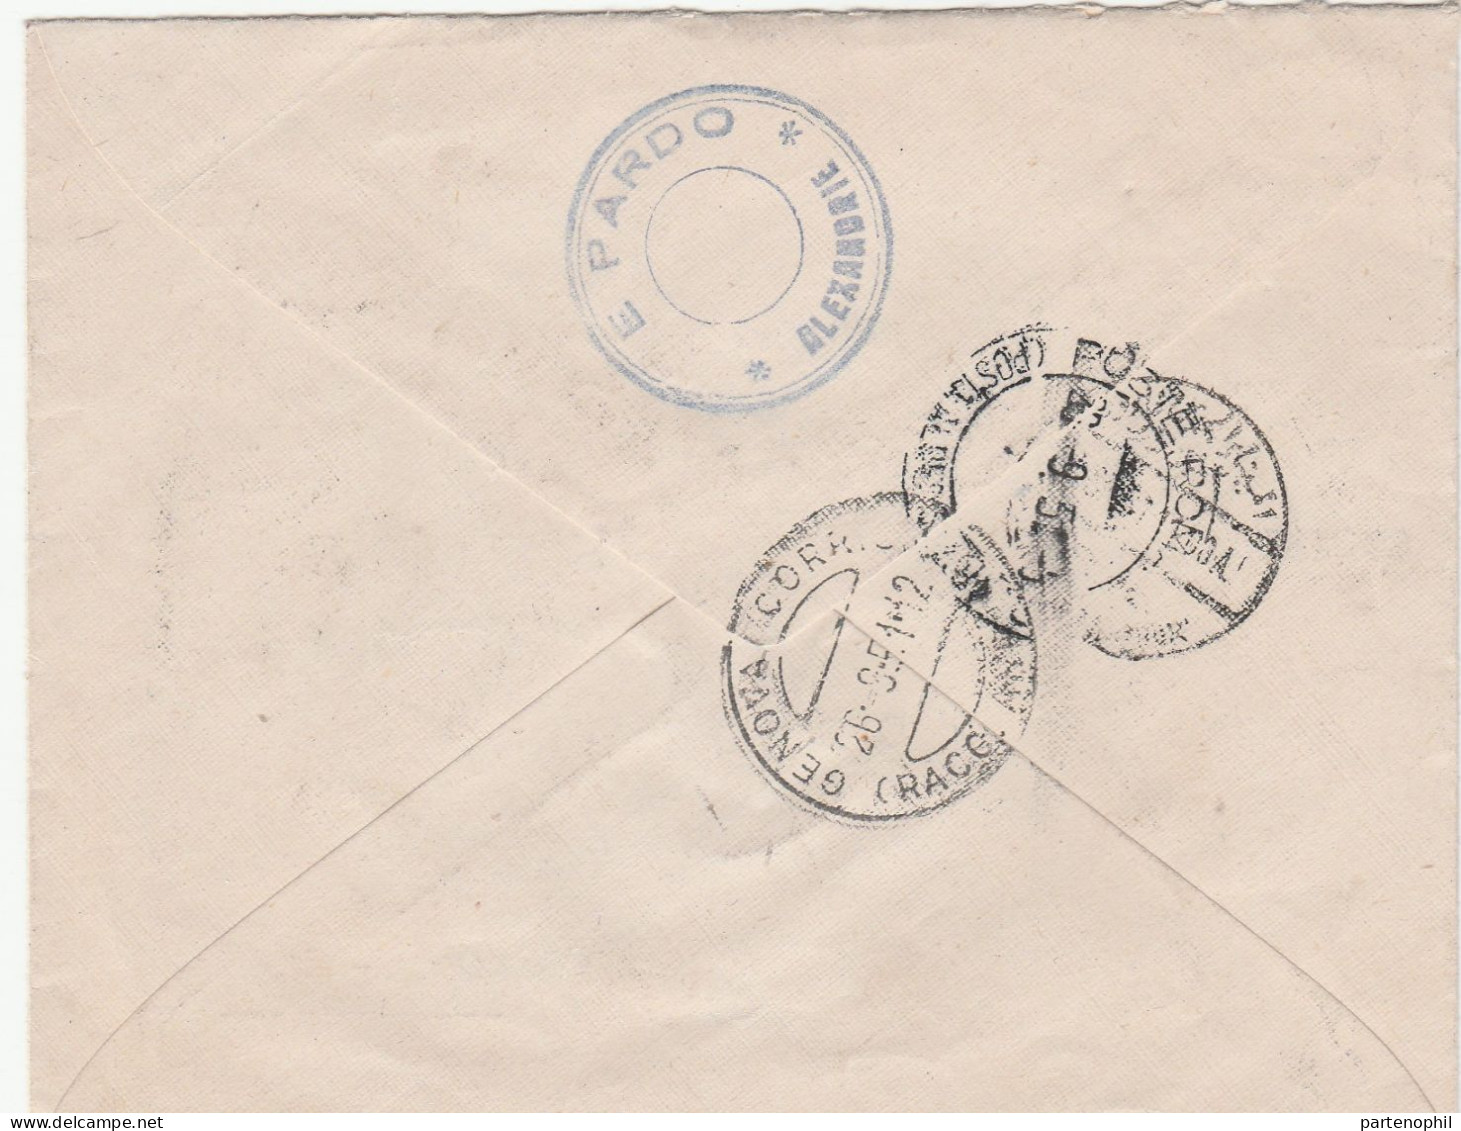 Egypt Egitto Aegypten 1951  Postgeschichte - Storia Postale - Histoire Postale - Cartas & Documentos